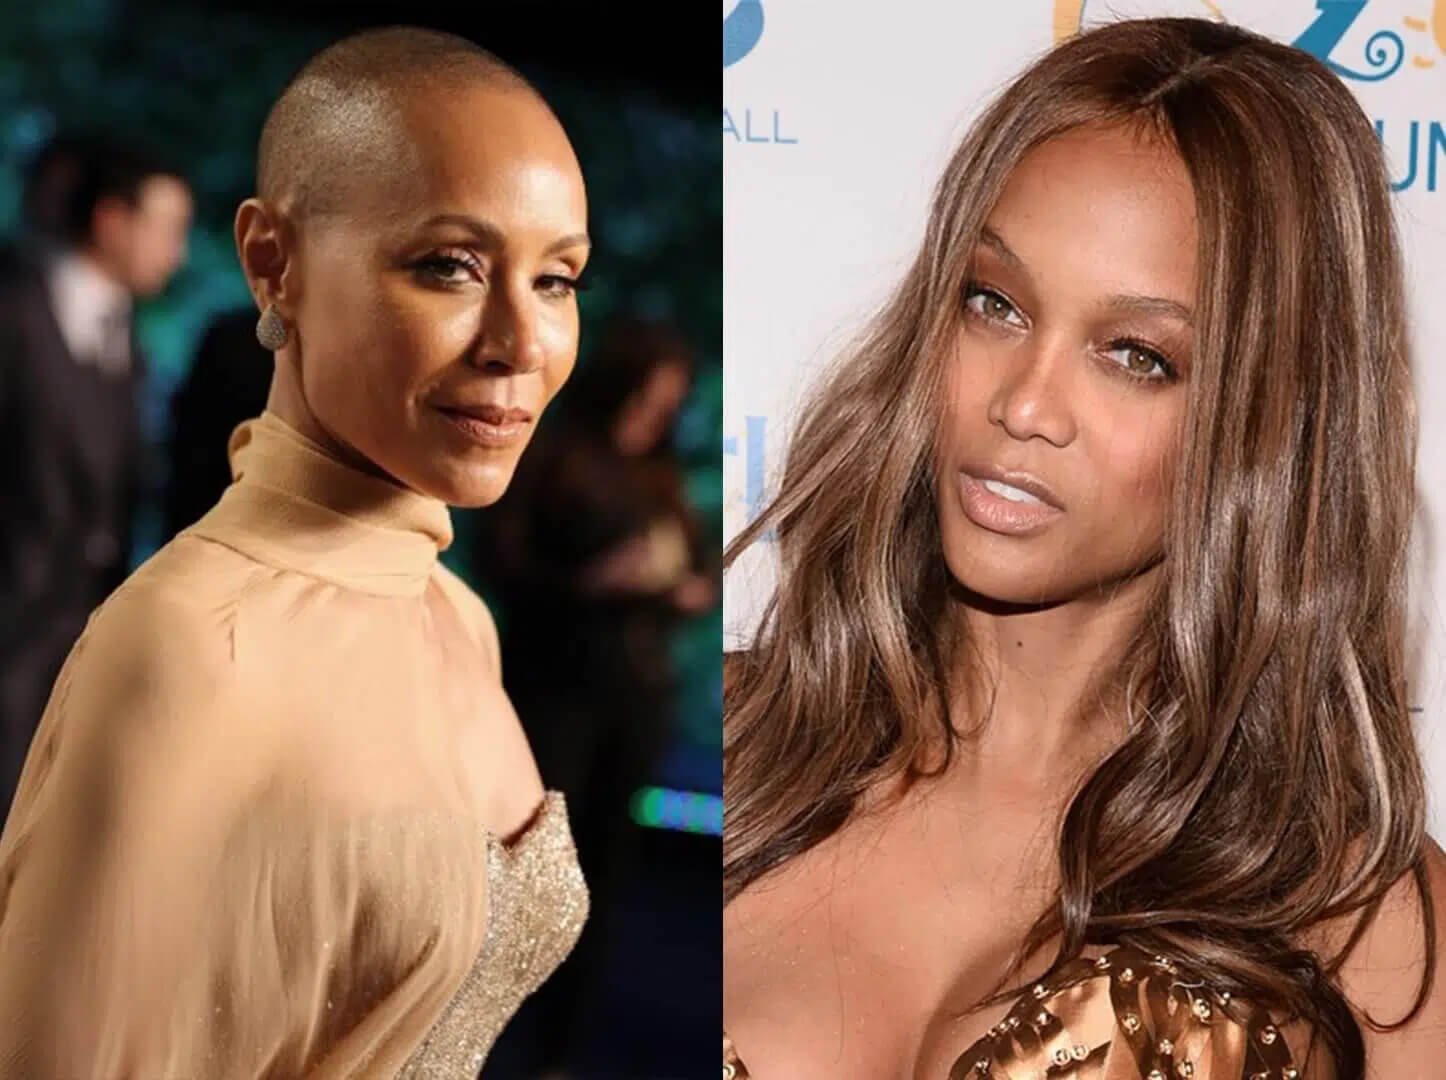 Celebrities Who Have Had Hair Transplants